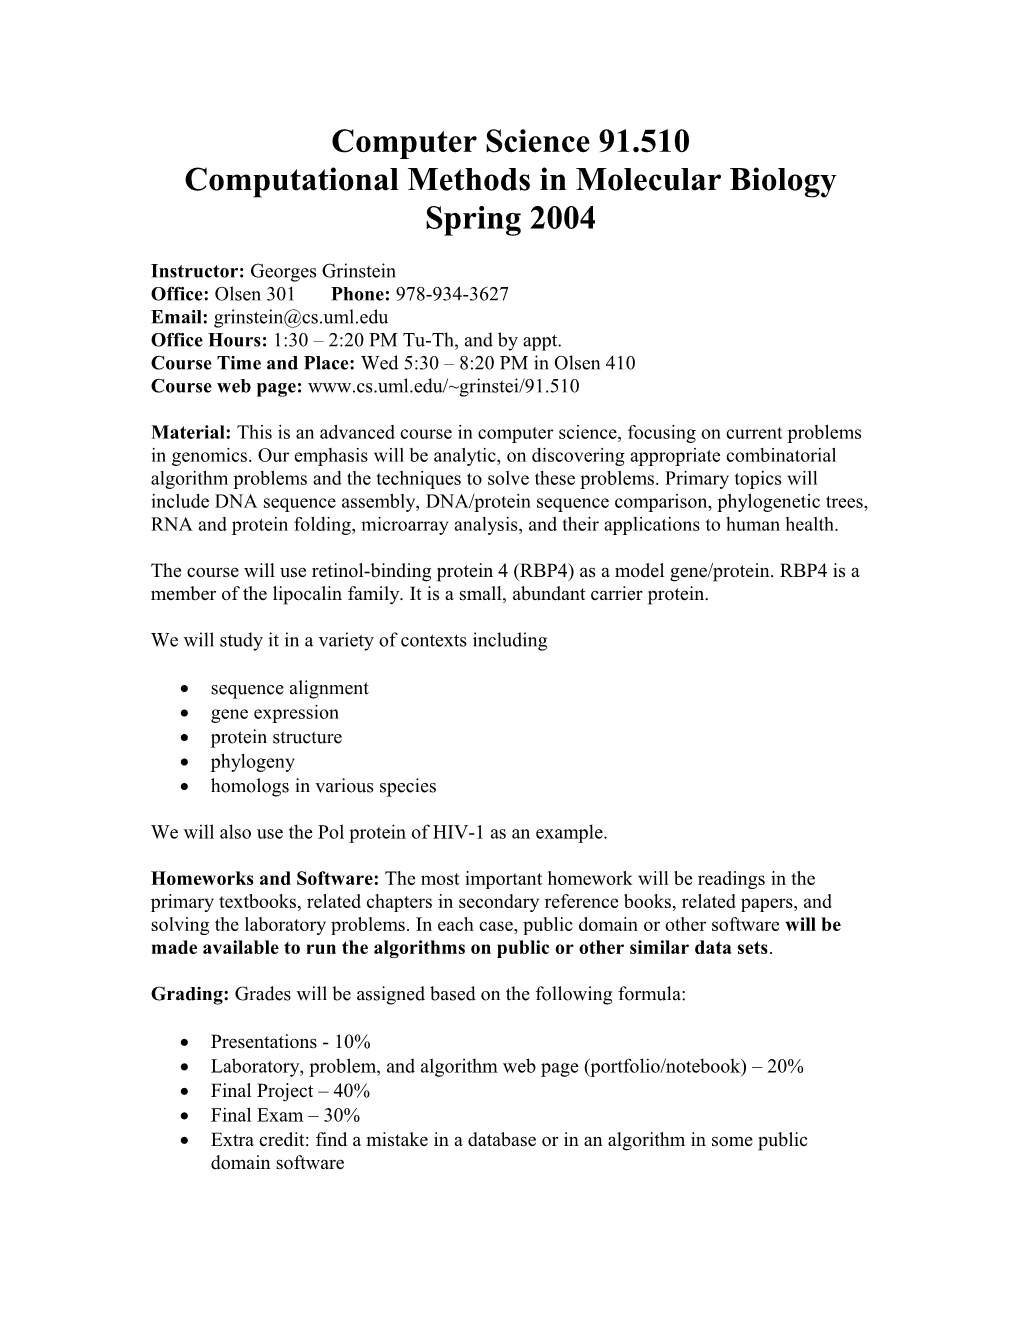 Computational Methods in Molecular Biology